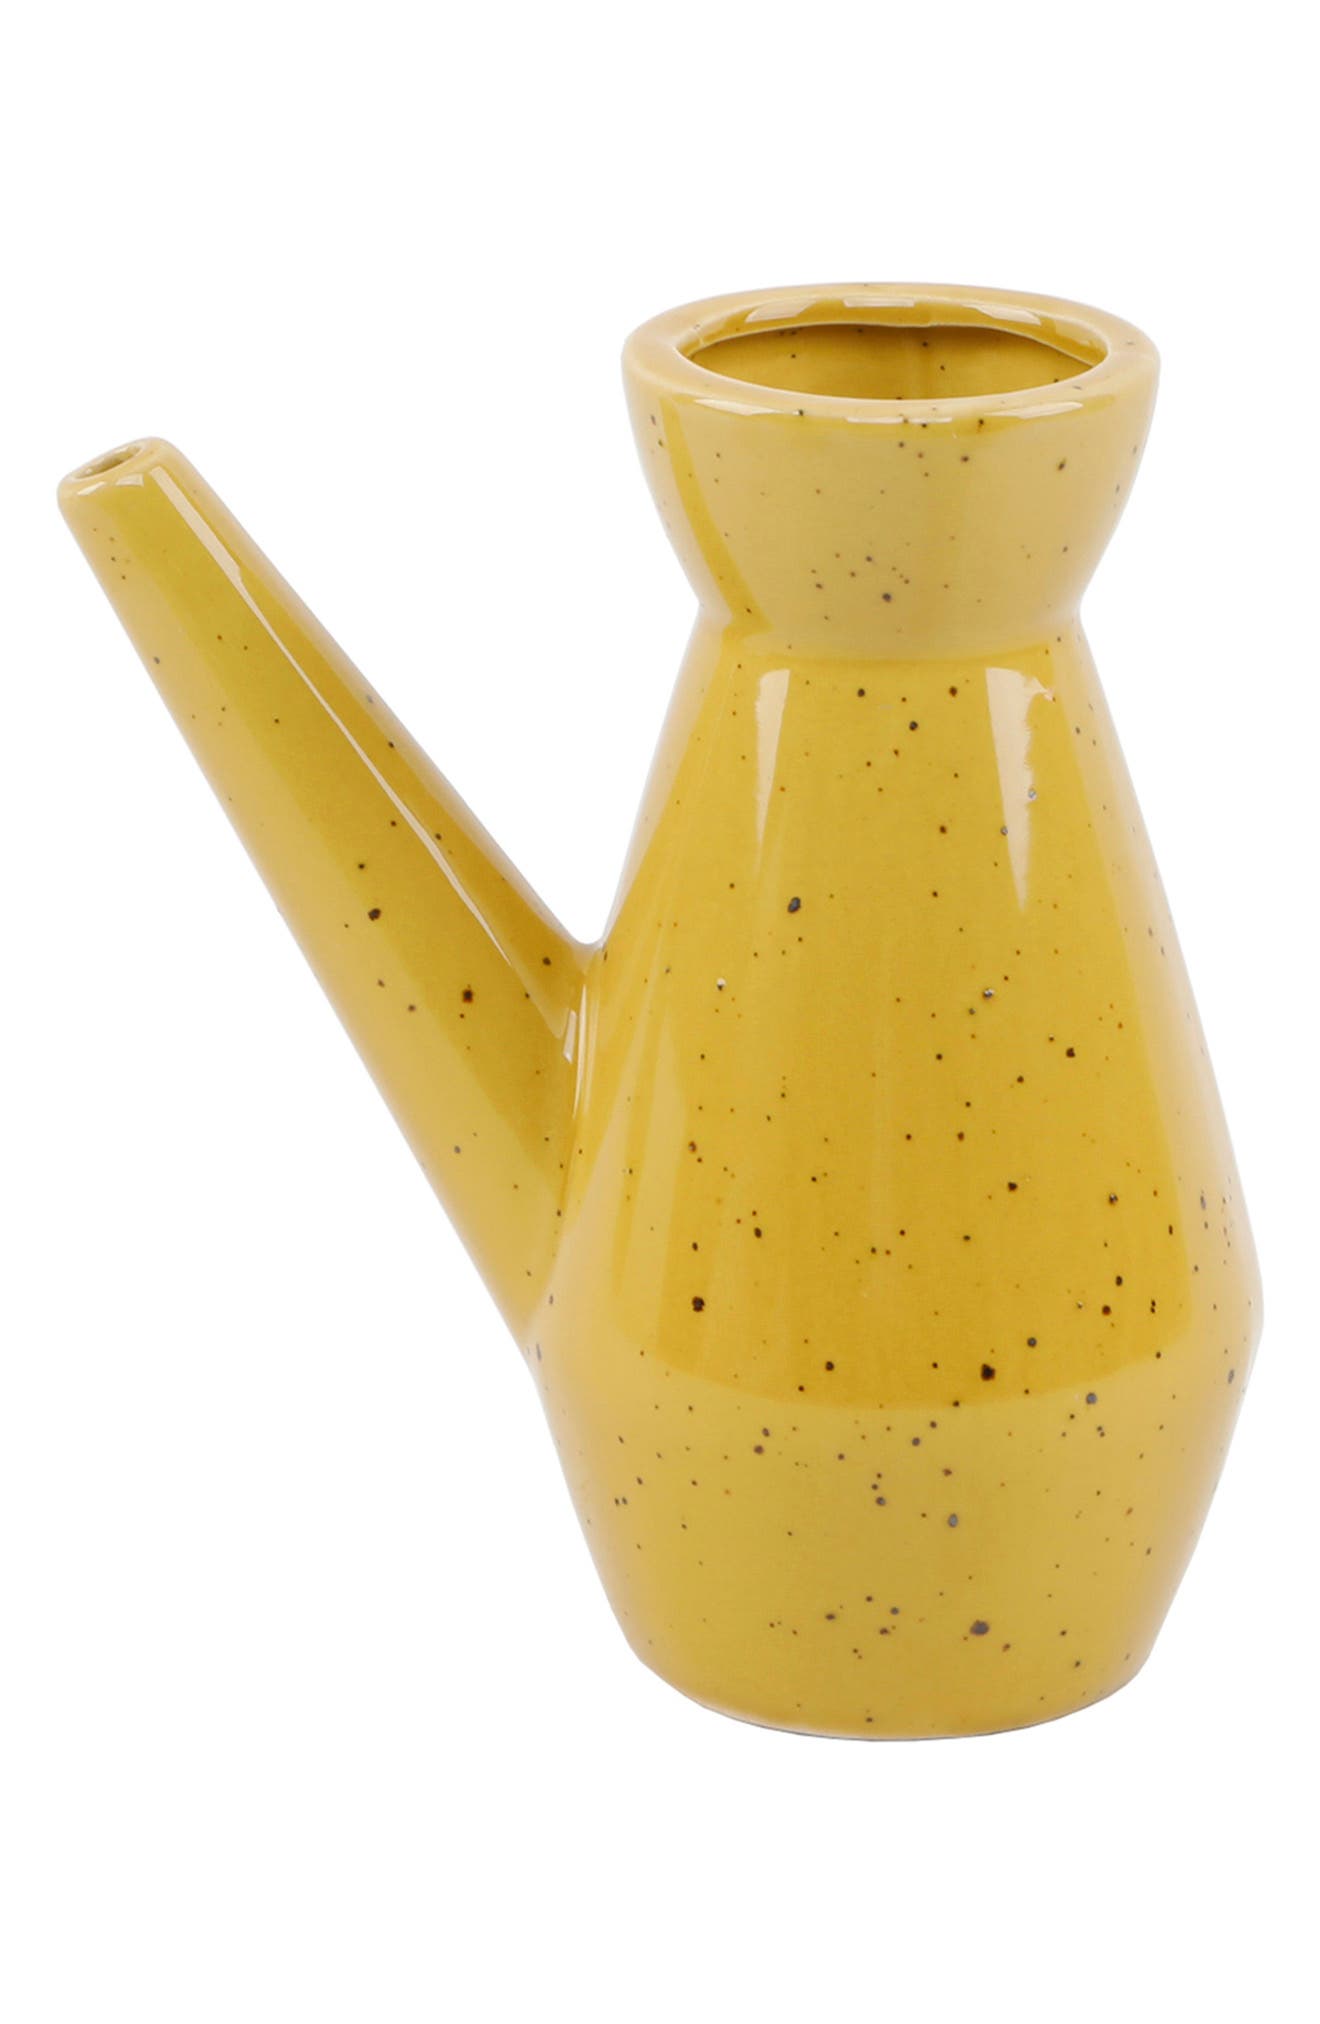 Flora Bunda 7in Ceramic Watering Can Speckl In Mustard